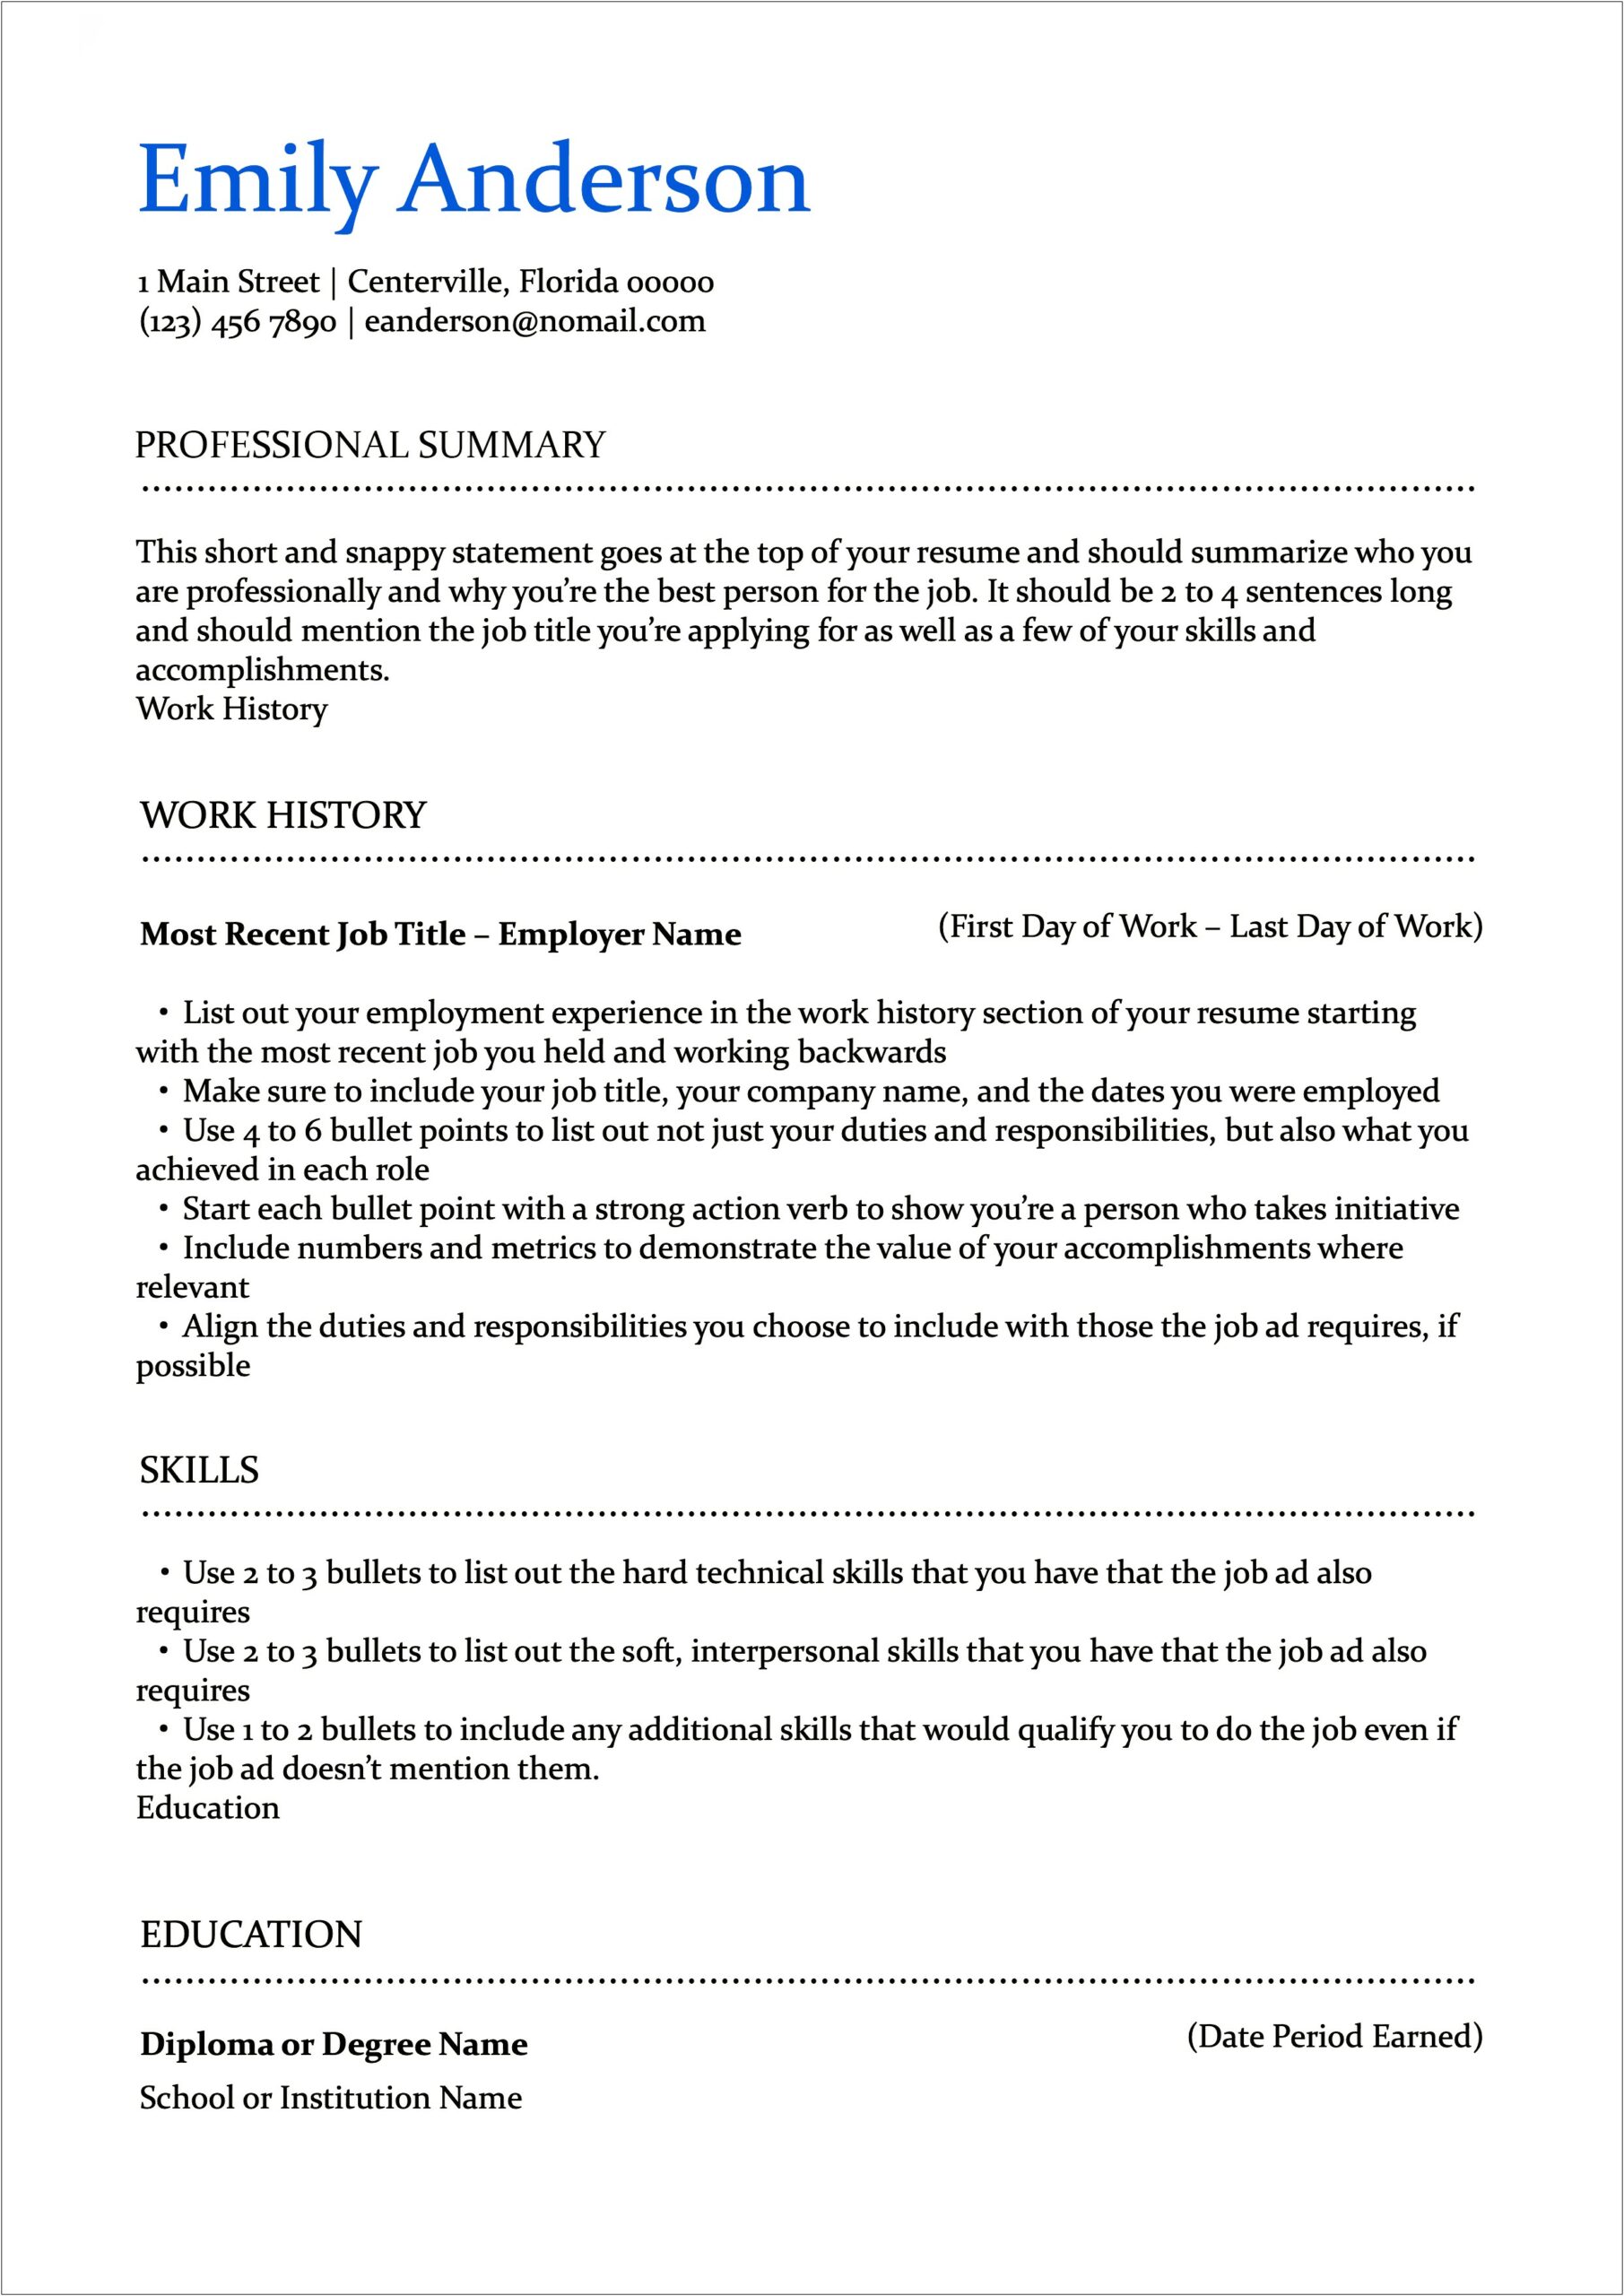 Sample Resume Points For Kubernetes